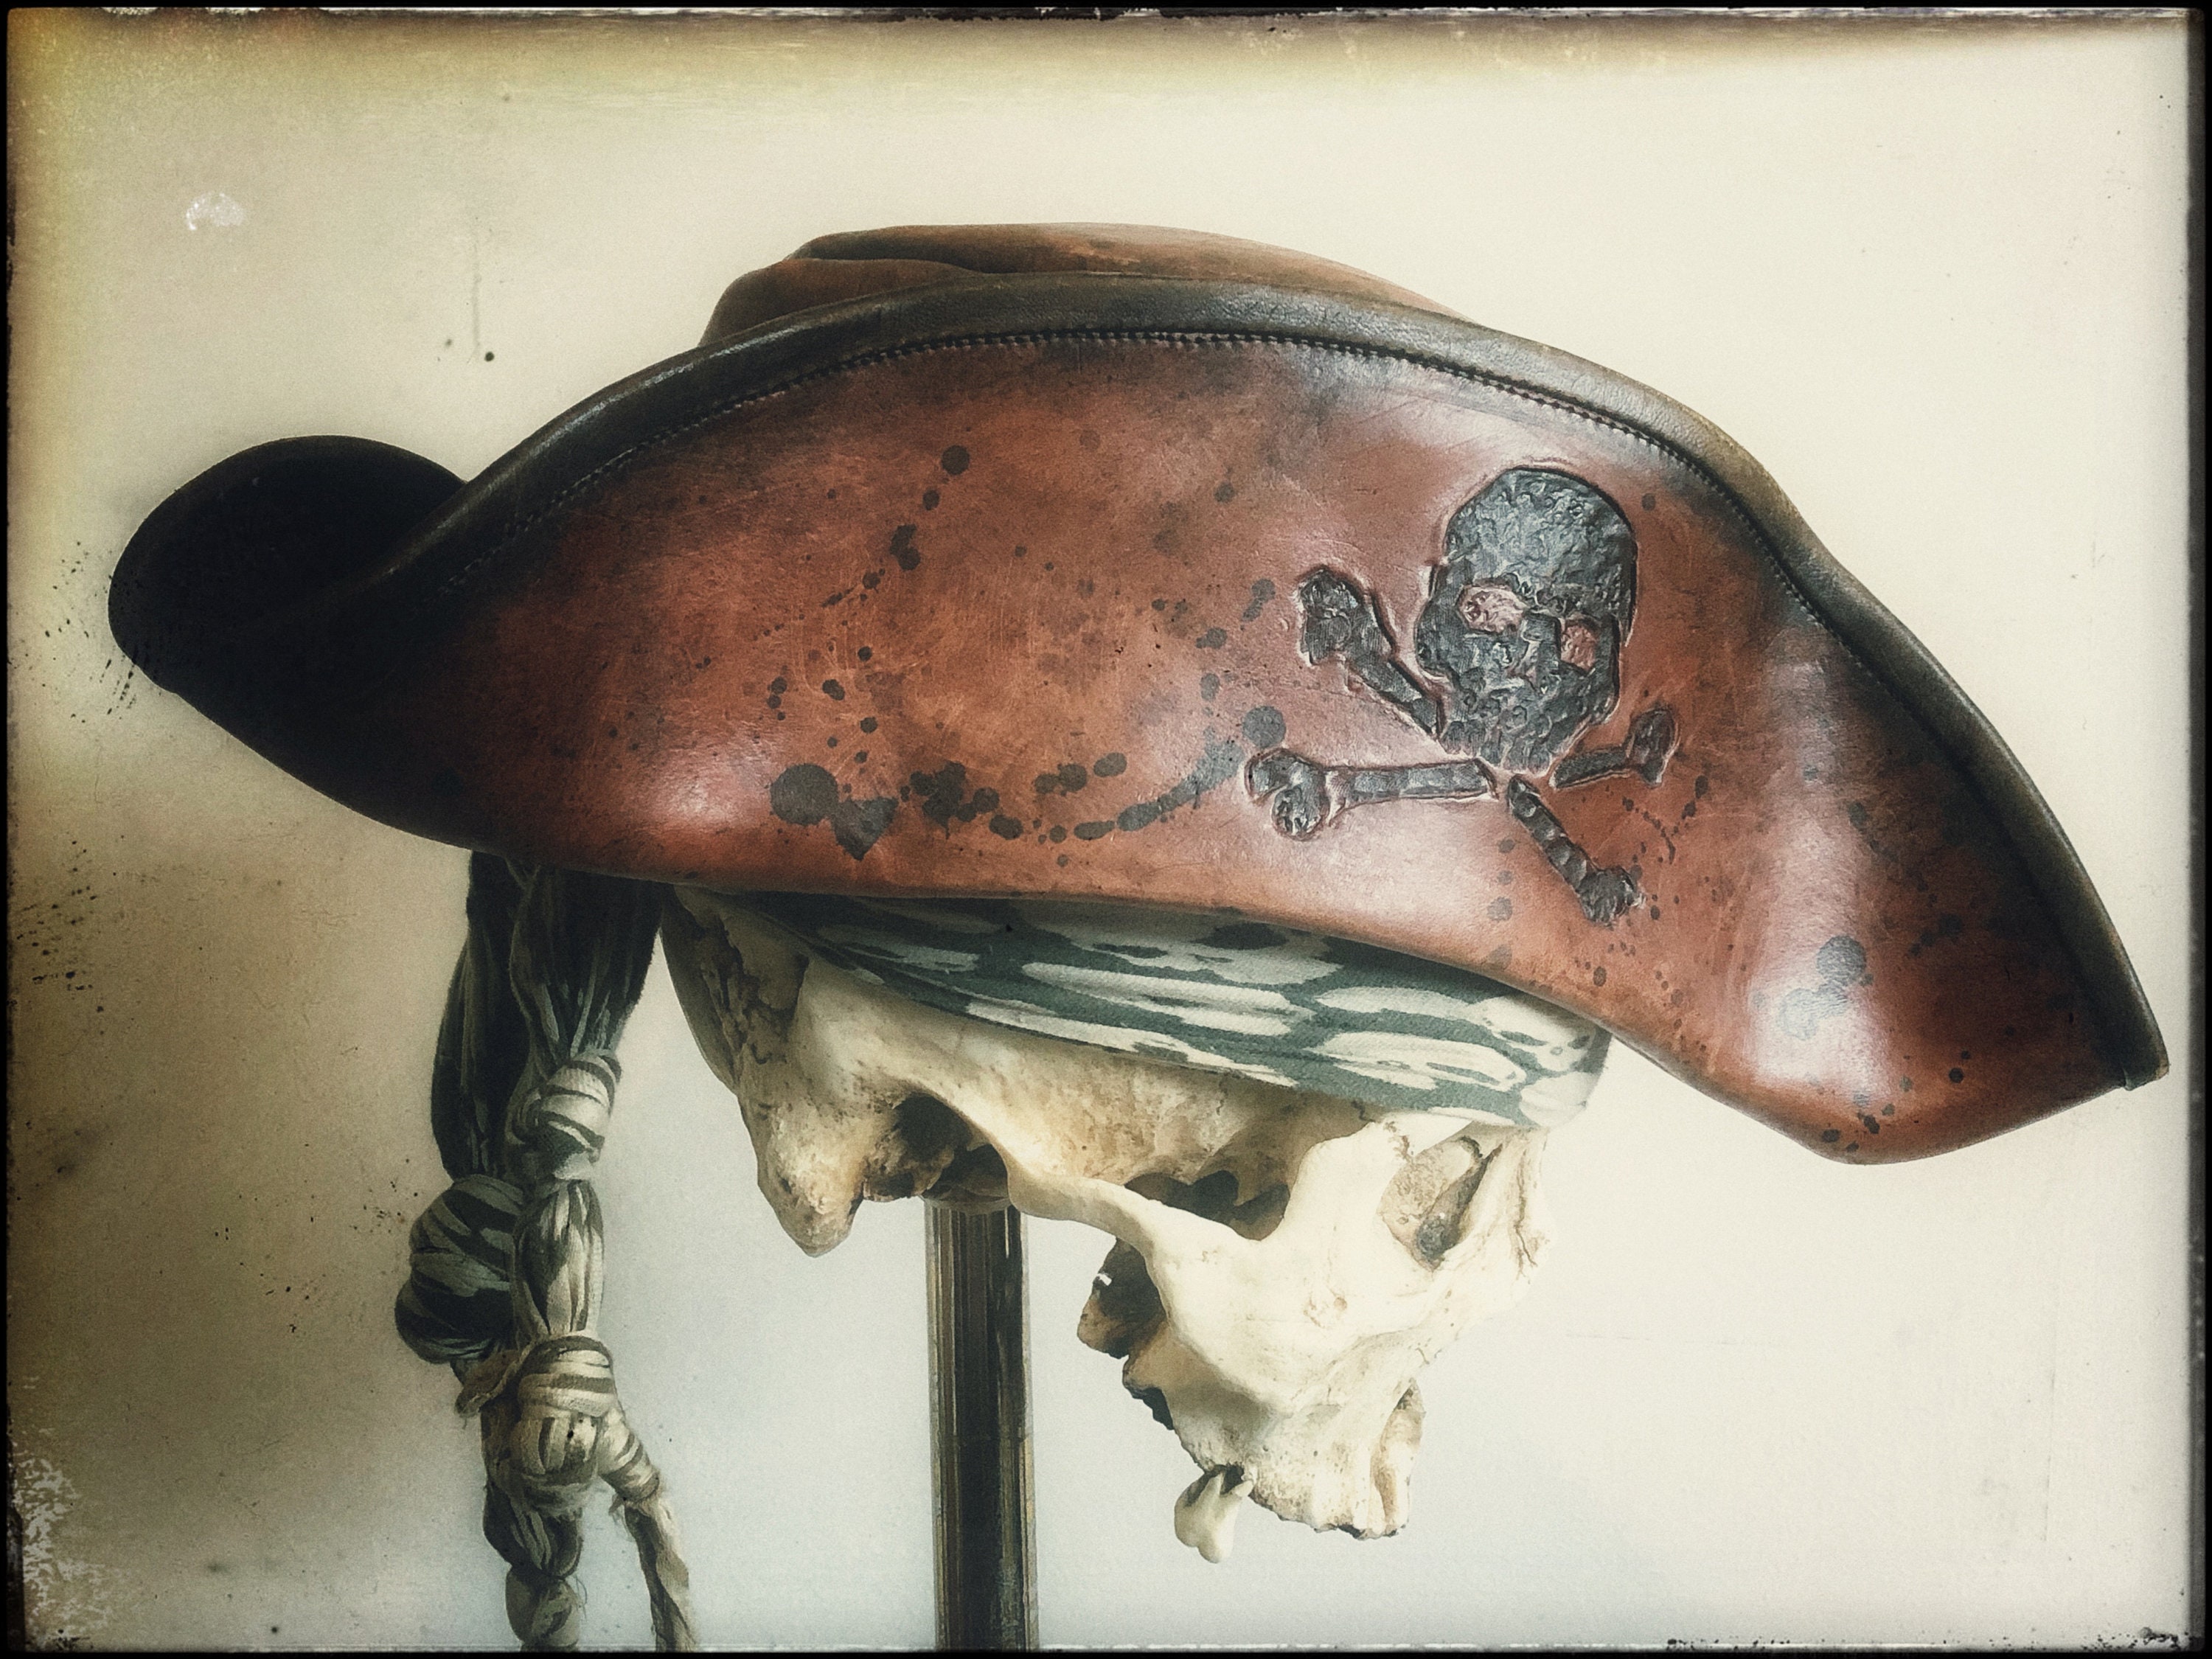 Leather Pirate Tricorn Hat Custom Sized -  UK